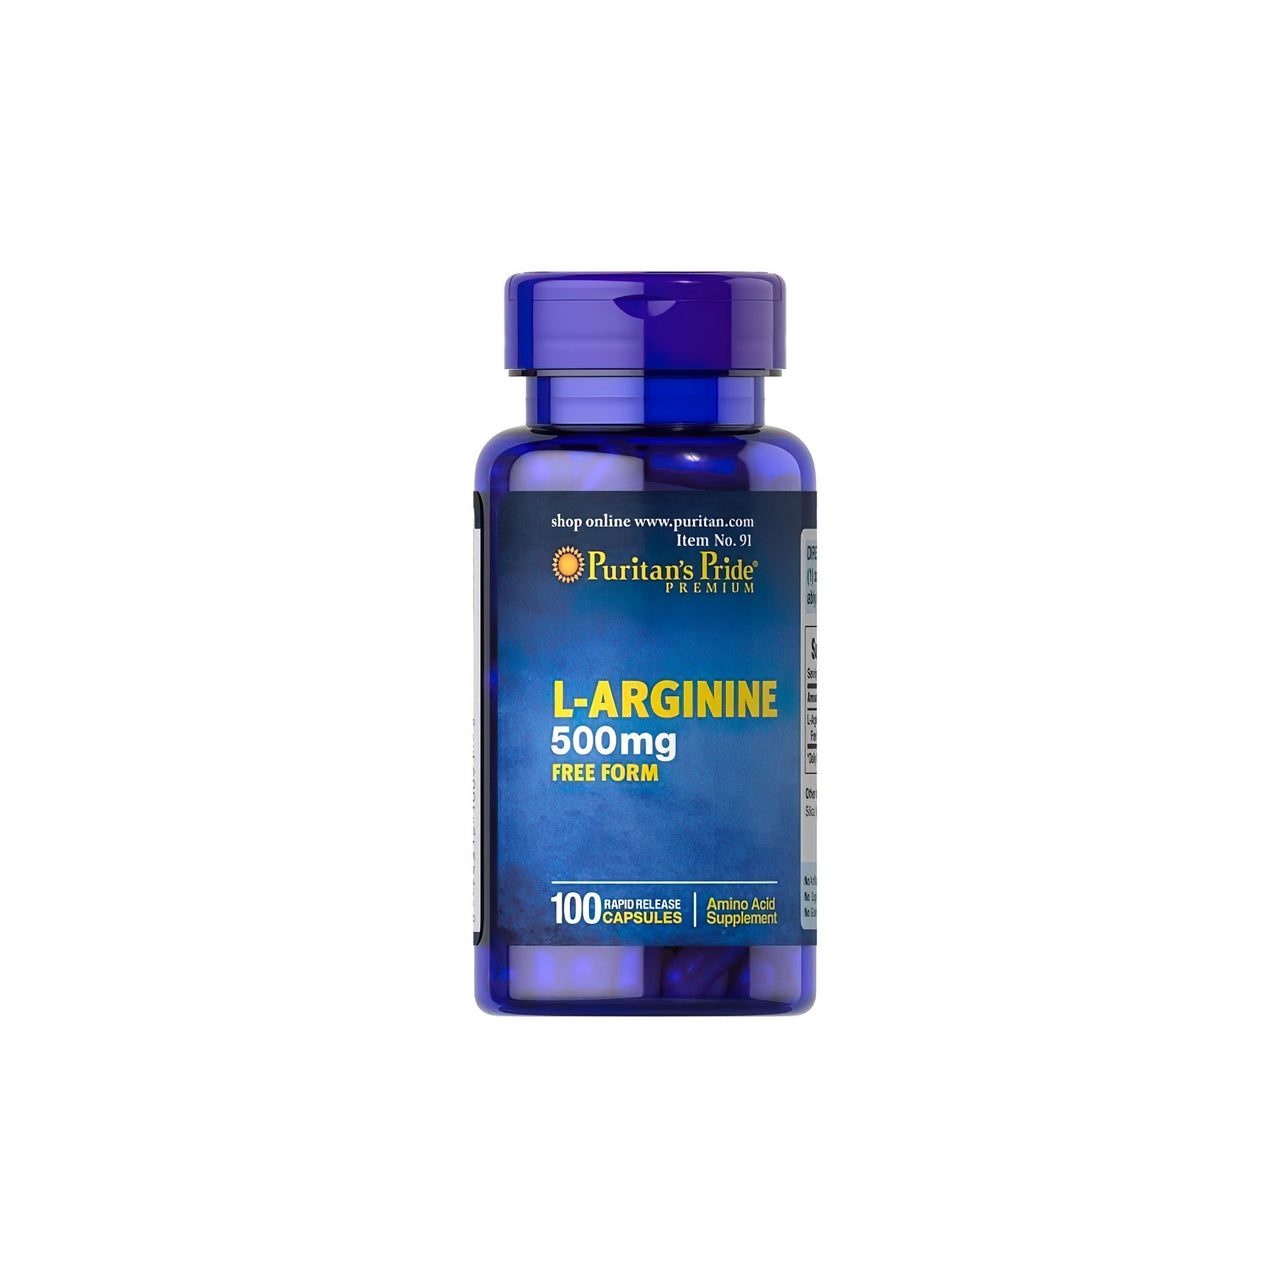 L-arginine 500 mg free form 100 capsules - front